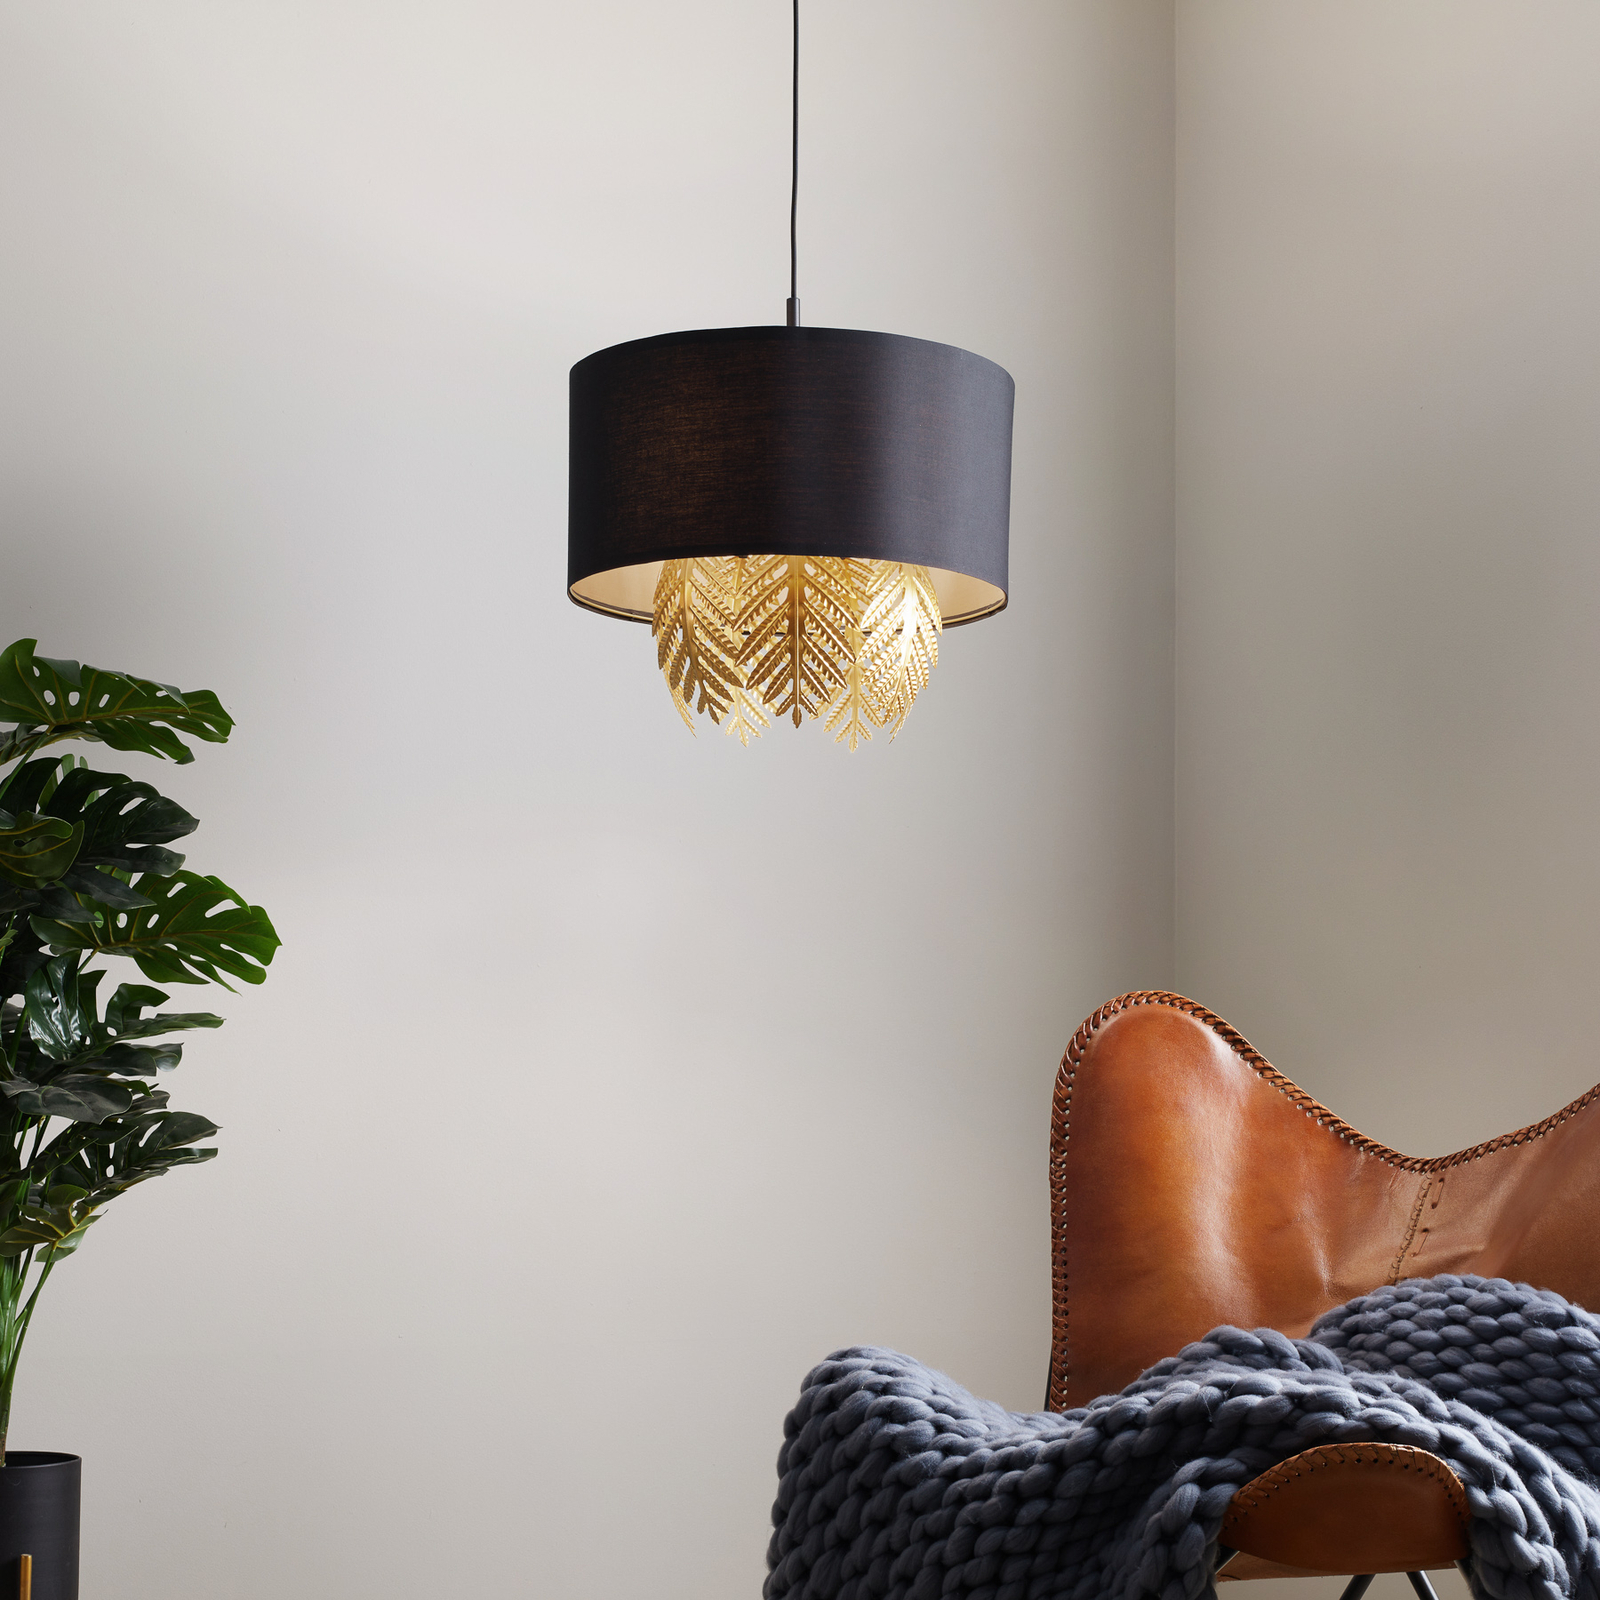 Lucande Malviras hanglamp, blad decoratie 1-lamp.